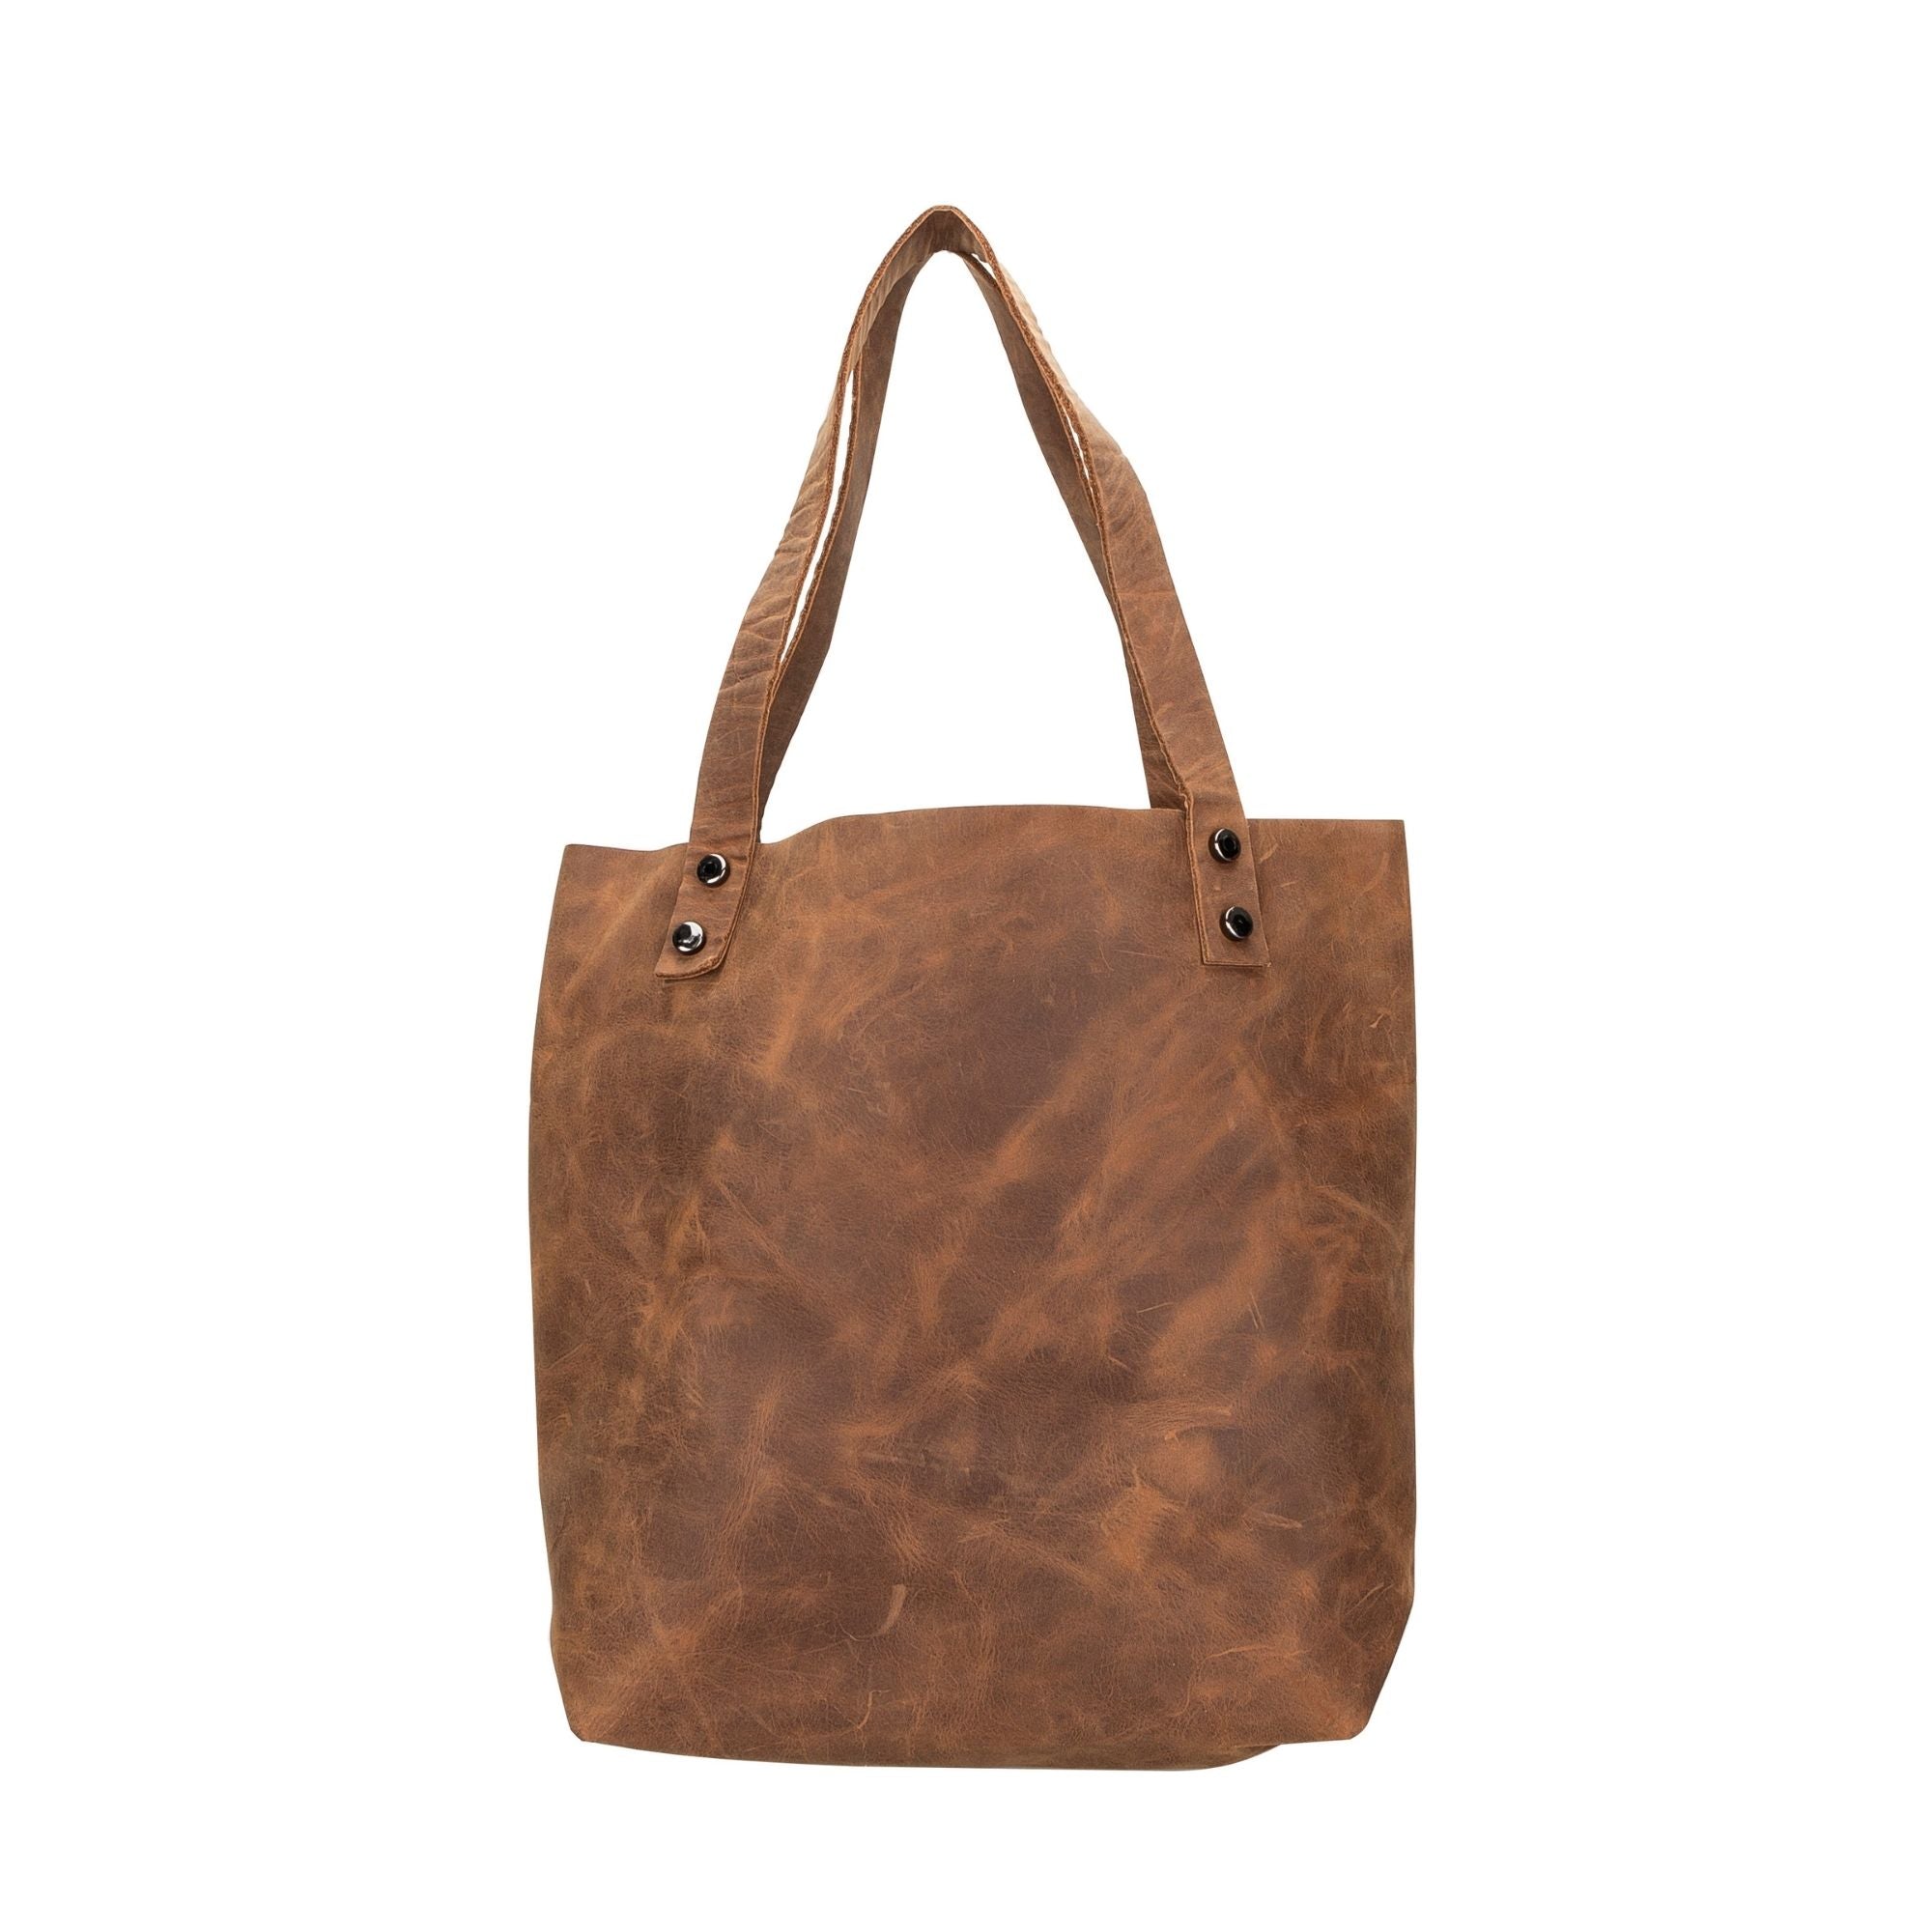 Alpine Leather Crossbody Handbag (Tote Bag) for Women - L - Dark Brown - TORONATA